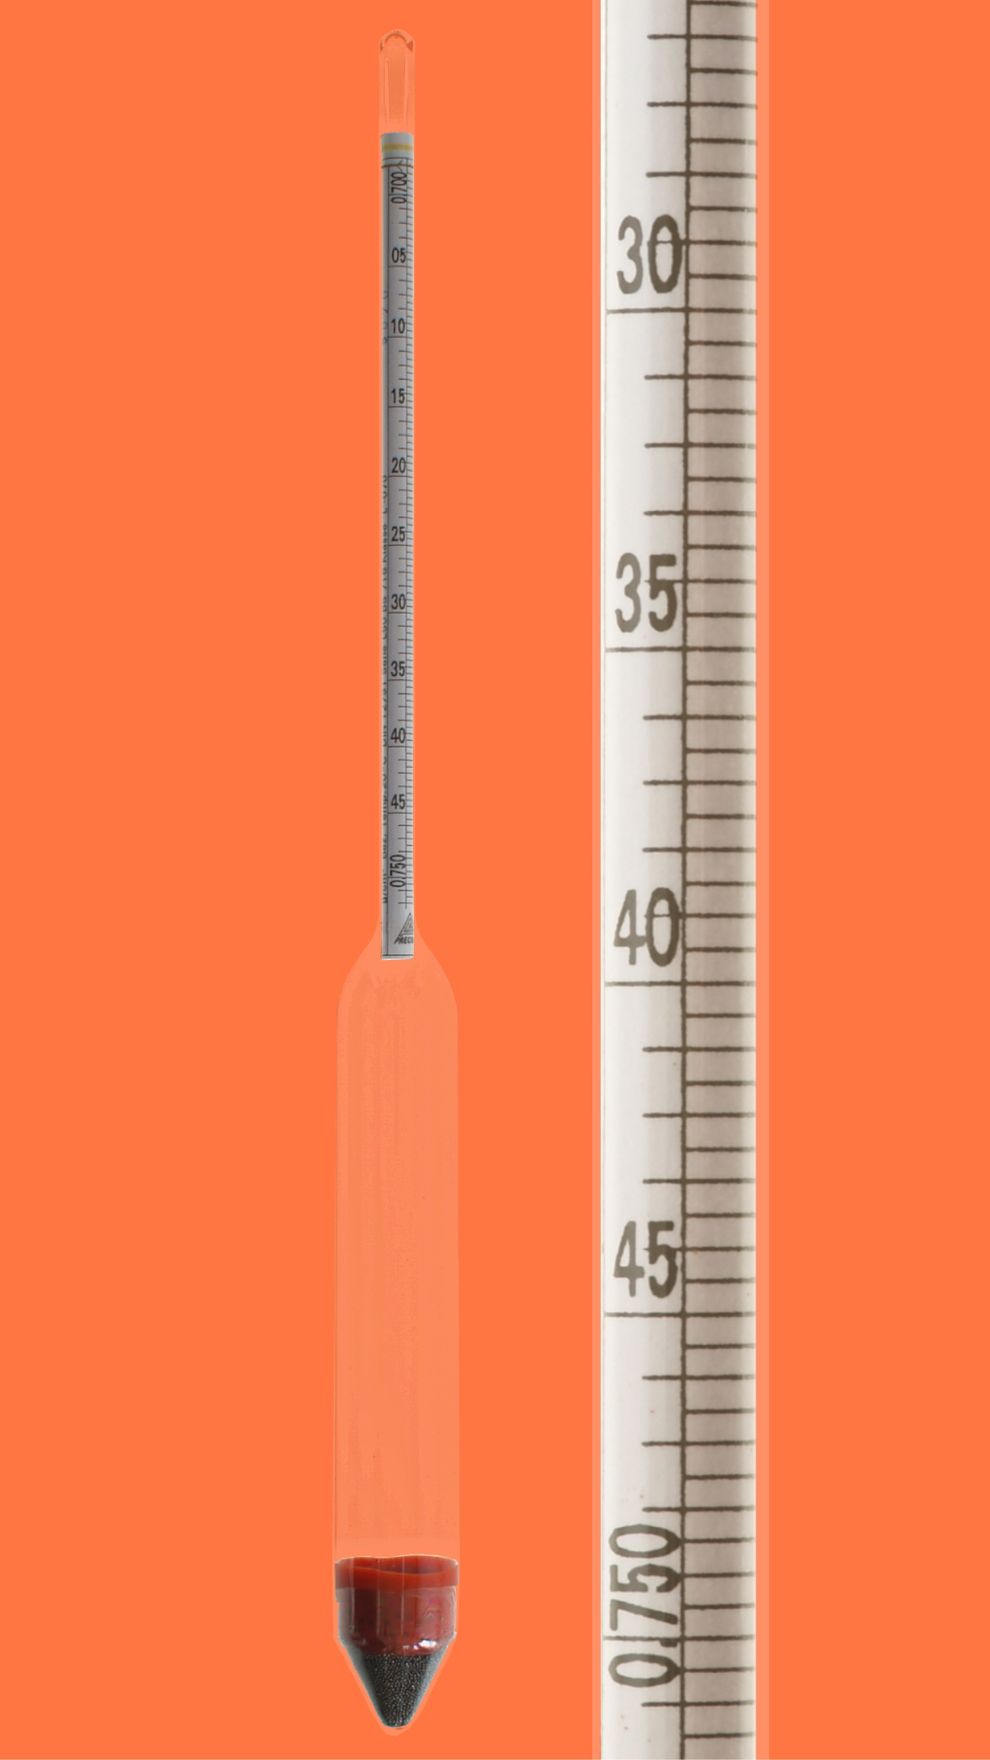 Aräometer, DIN 12791, L50, 1,55-1,60:0,0005g/cm³, Bezugstemp. 20°C, ohne Thermometer